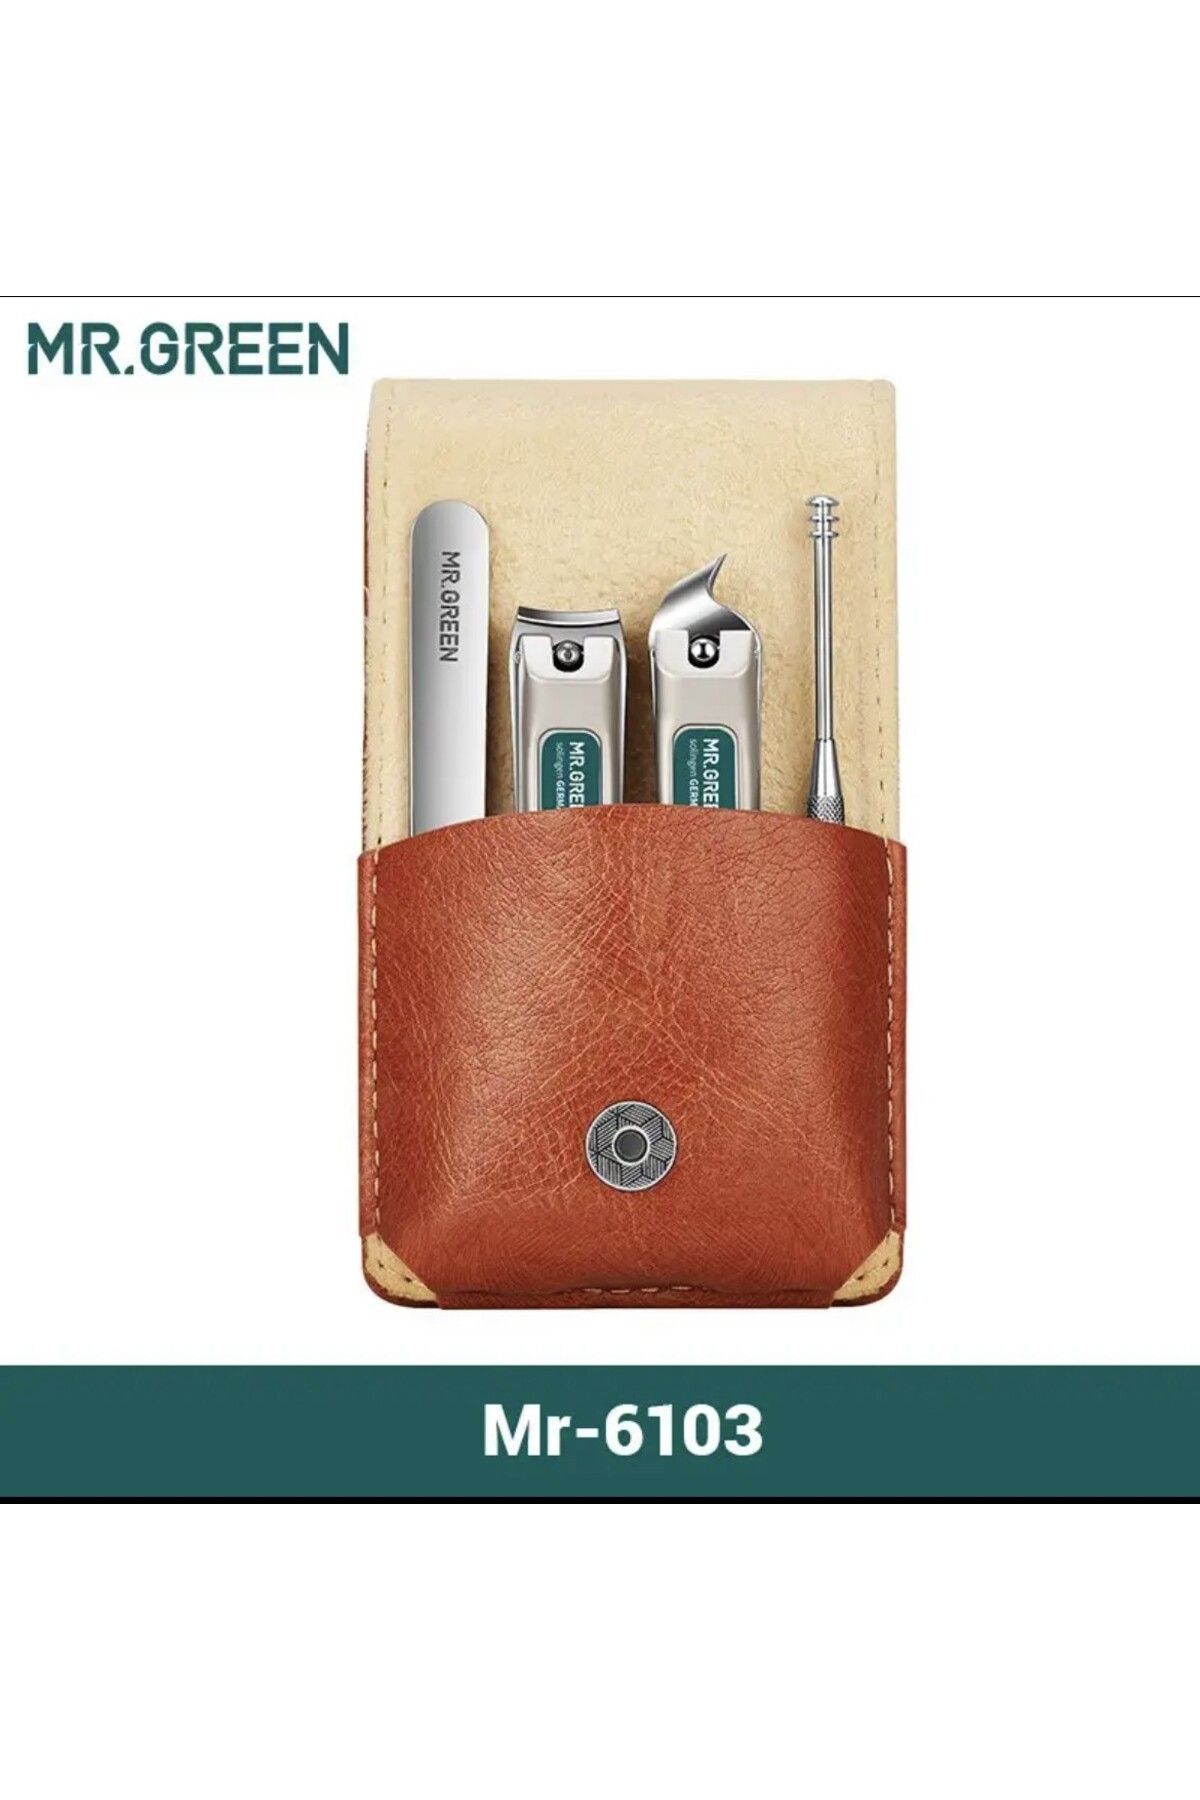 MR .GREEN MR-6103 Alman Premium Profesyonel Manikür Set